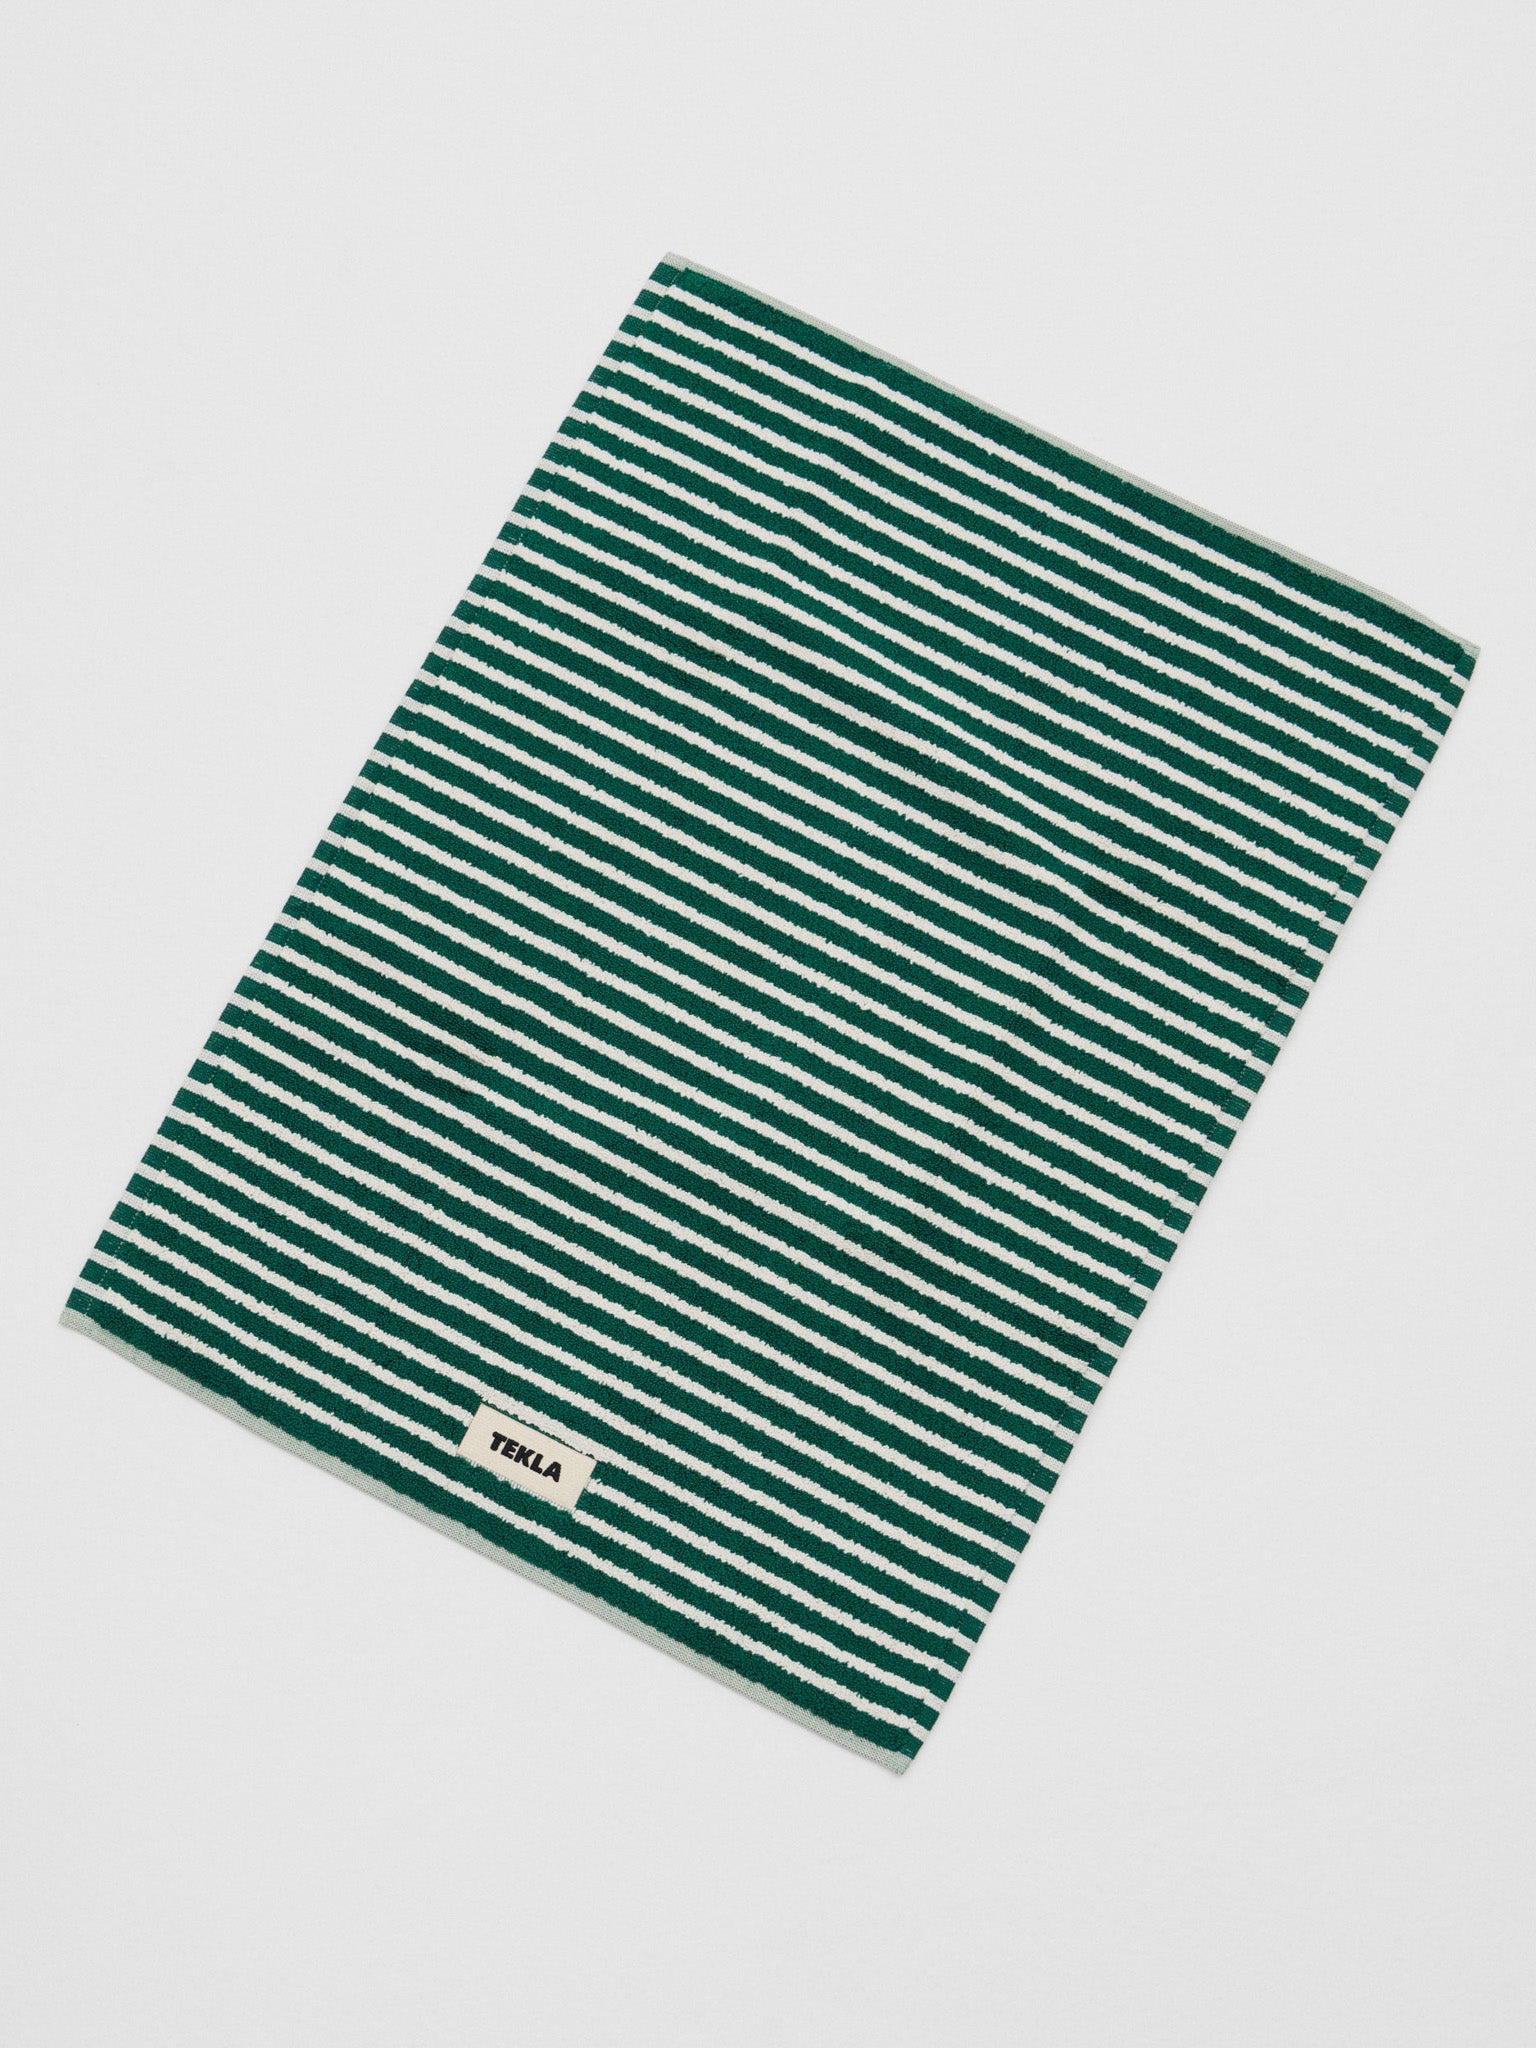 Tekla - Bath Mat in Teal Green Stripes